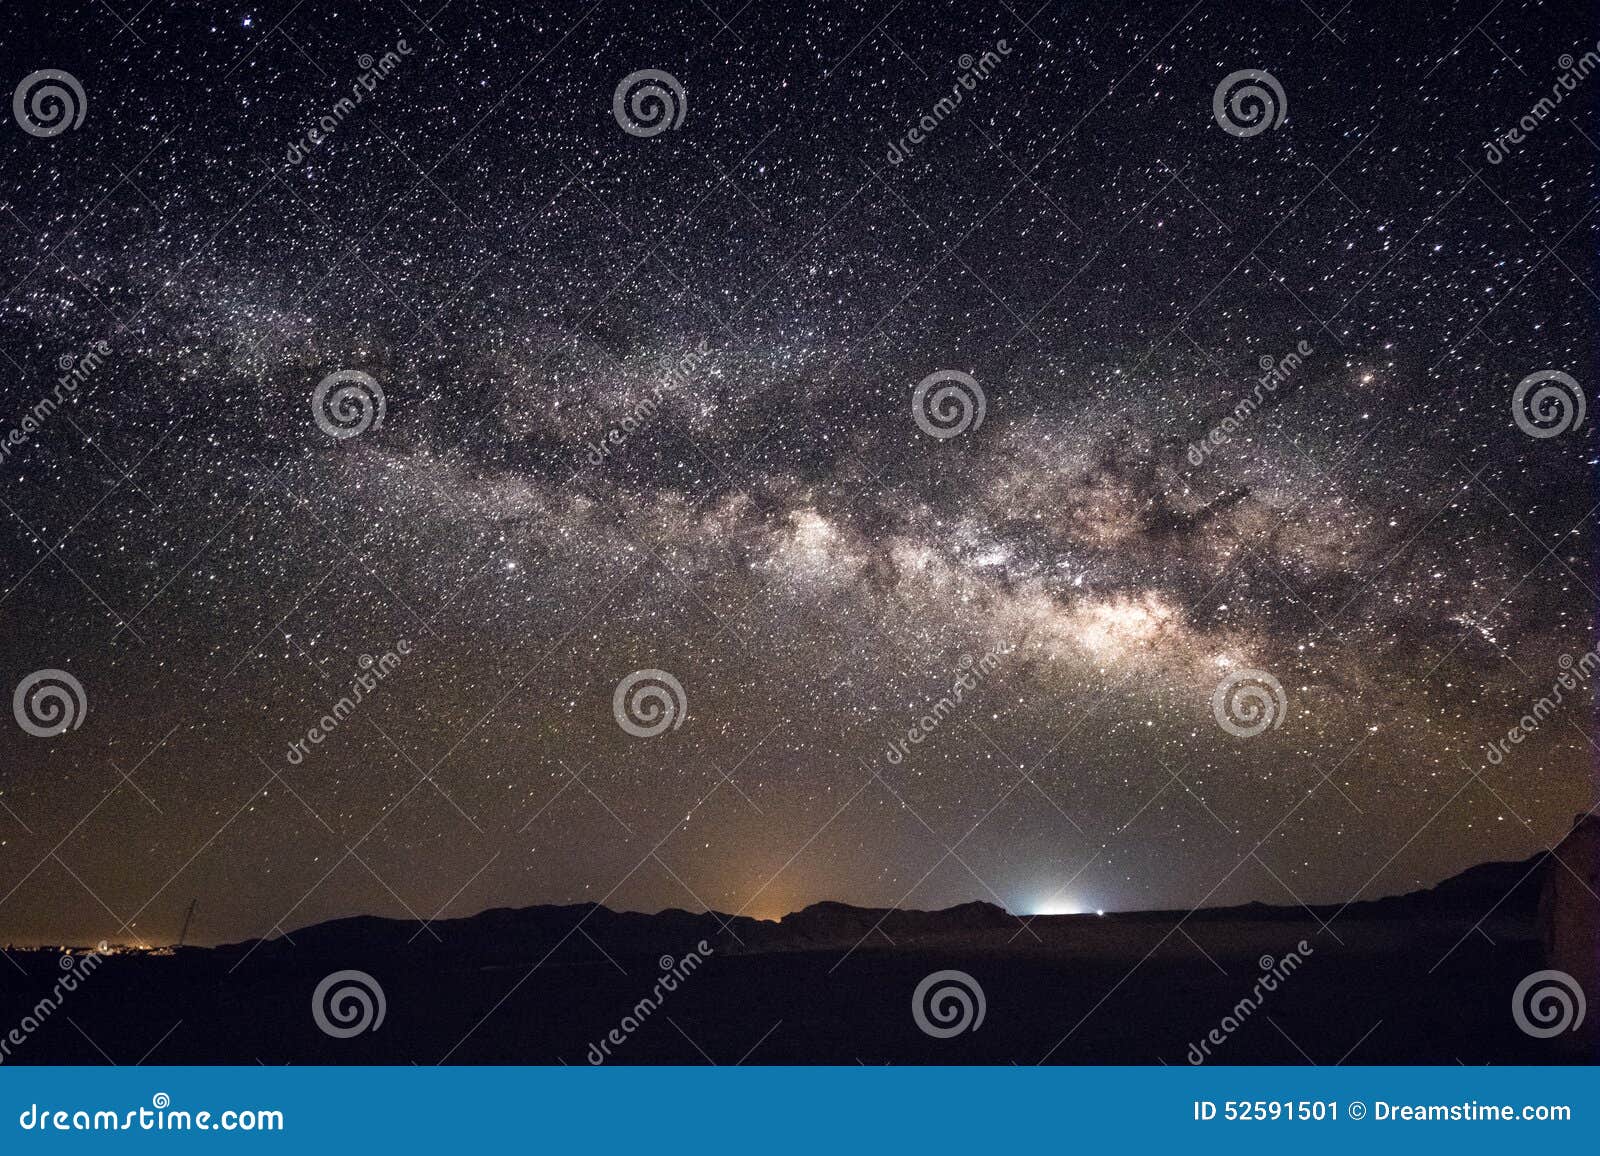 milky way galaxy and stars above negev desert israel